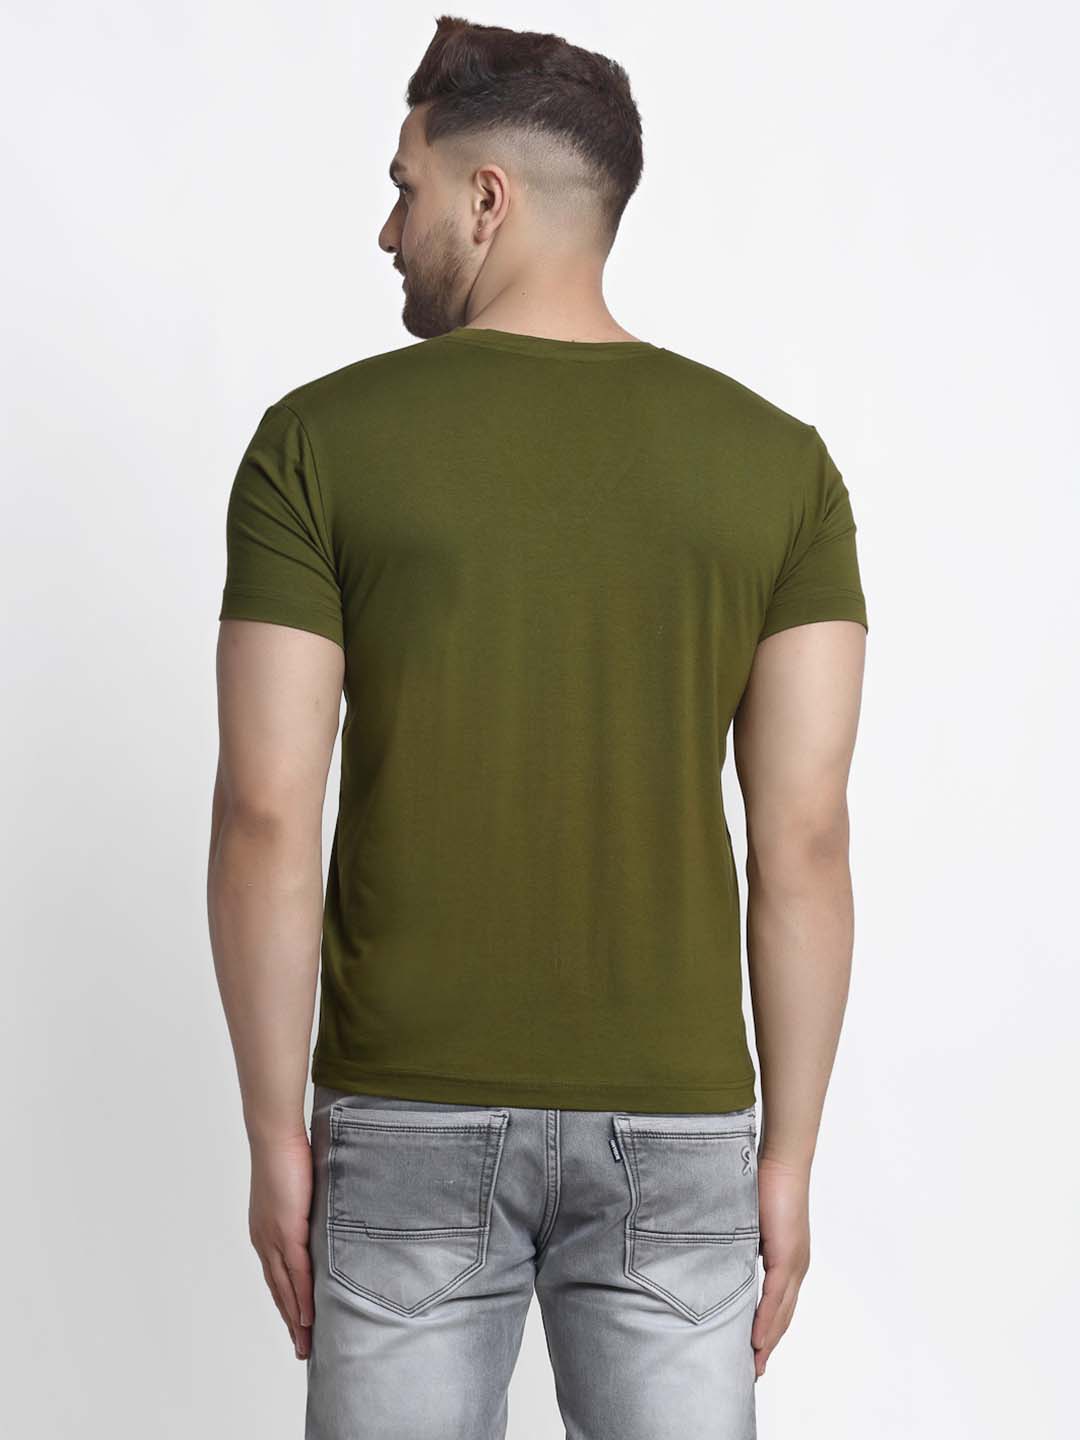 Men's Systumm Cotton Regular Fit V Neck T-Shirt - Friskers